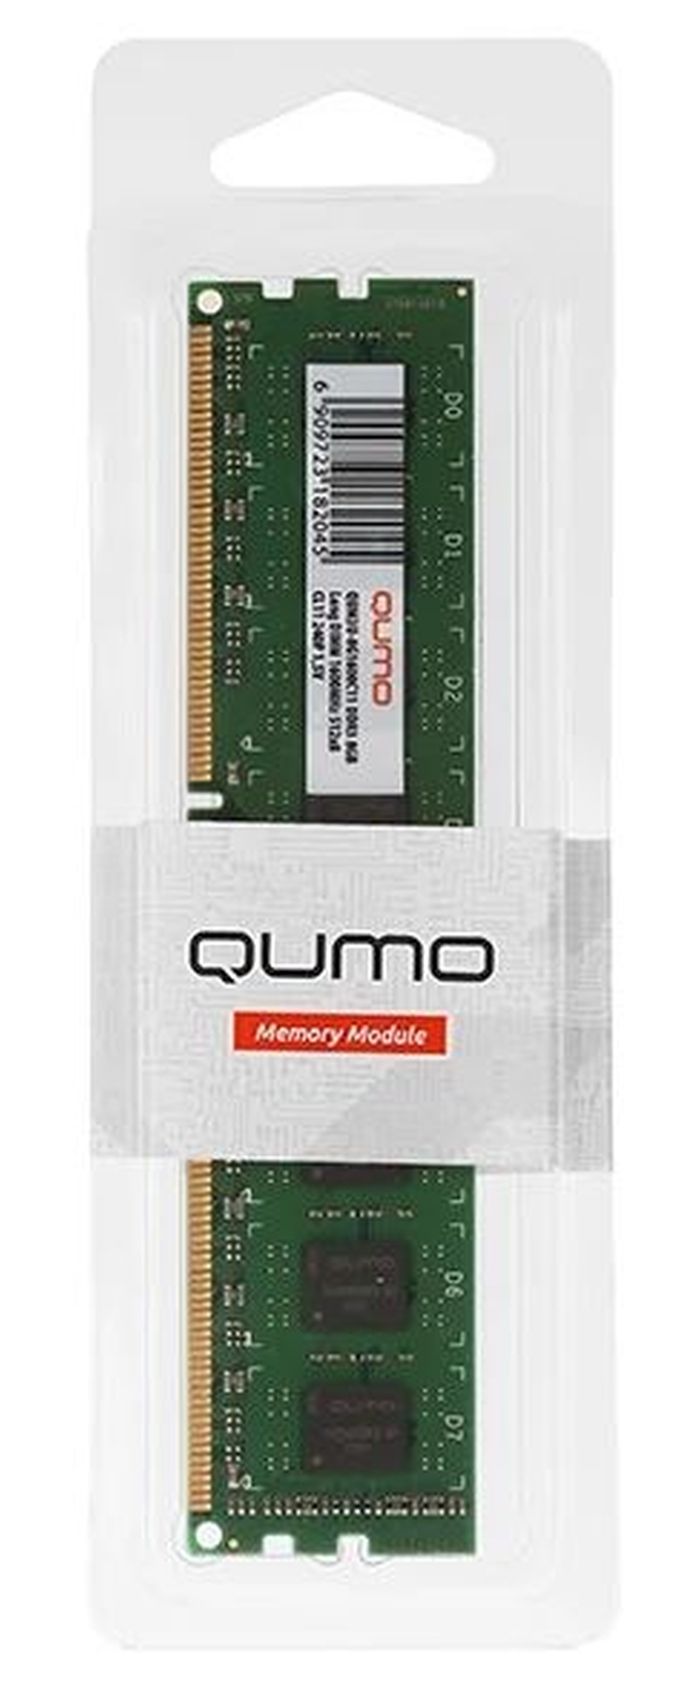 Оперативная память QUMO DDR3 DIMM 4GB 1333MHz (QUM3U-4G1333C9) память оперативная ddr3 qumo 4gb 1600mhz qum3u 4g1600c11